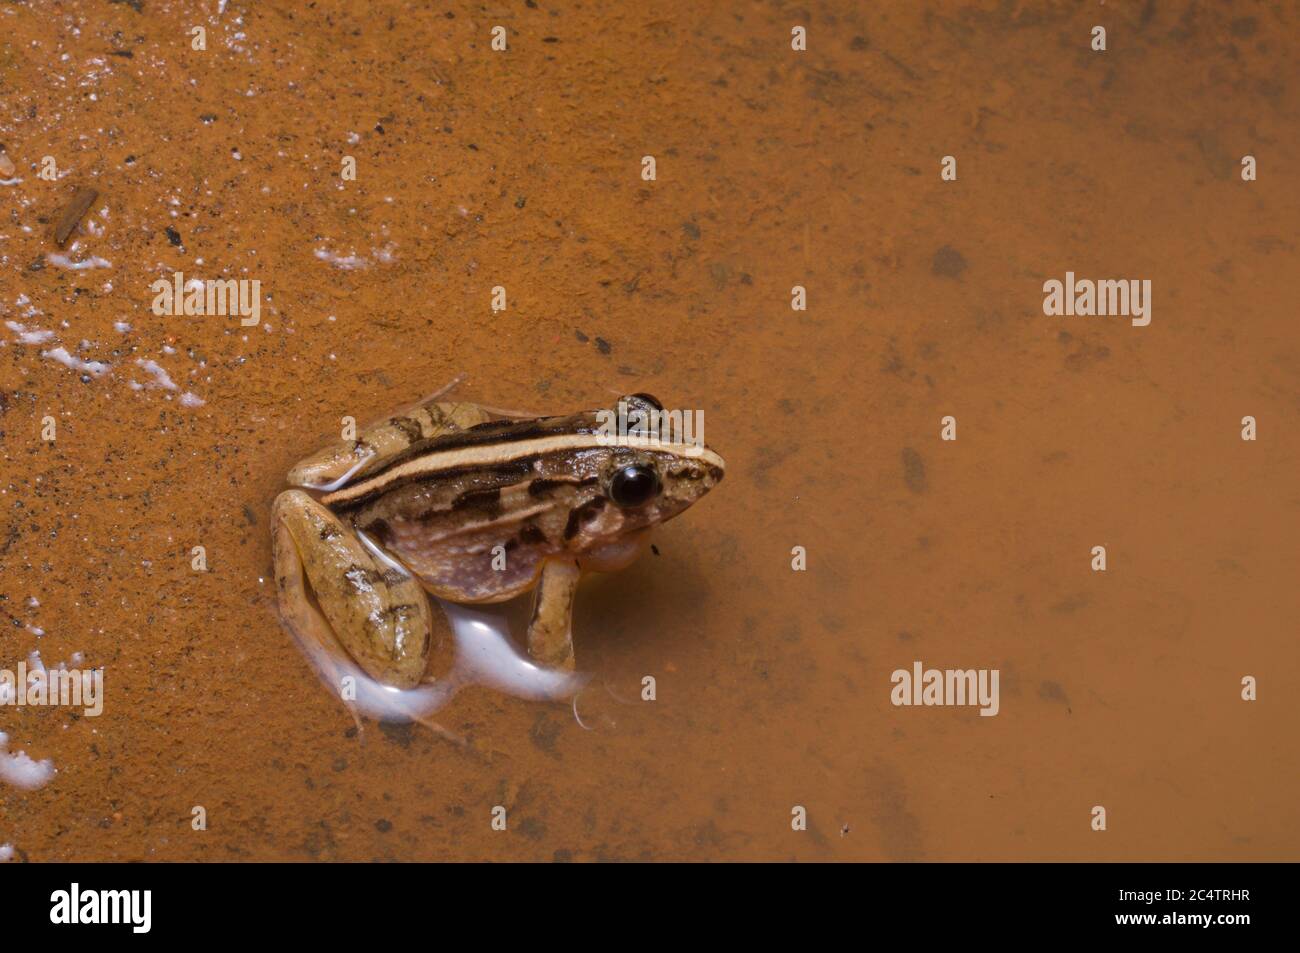 A Mountain Paddy Field Frog (Minervarya kirtisinghei) in a shallow puddle at night in Kalutara, Sri Lanka Stock Photo